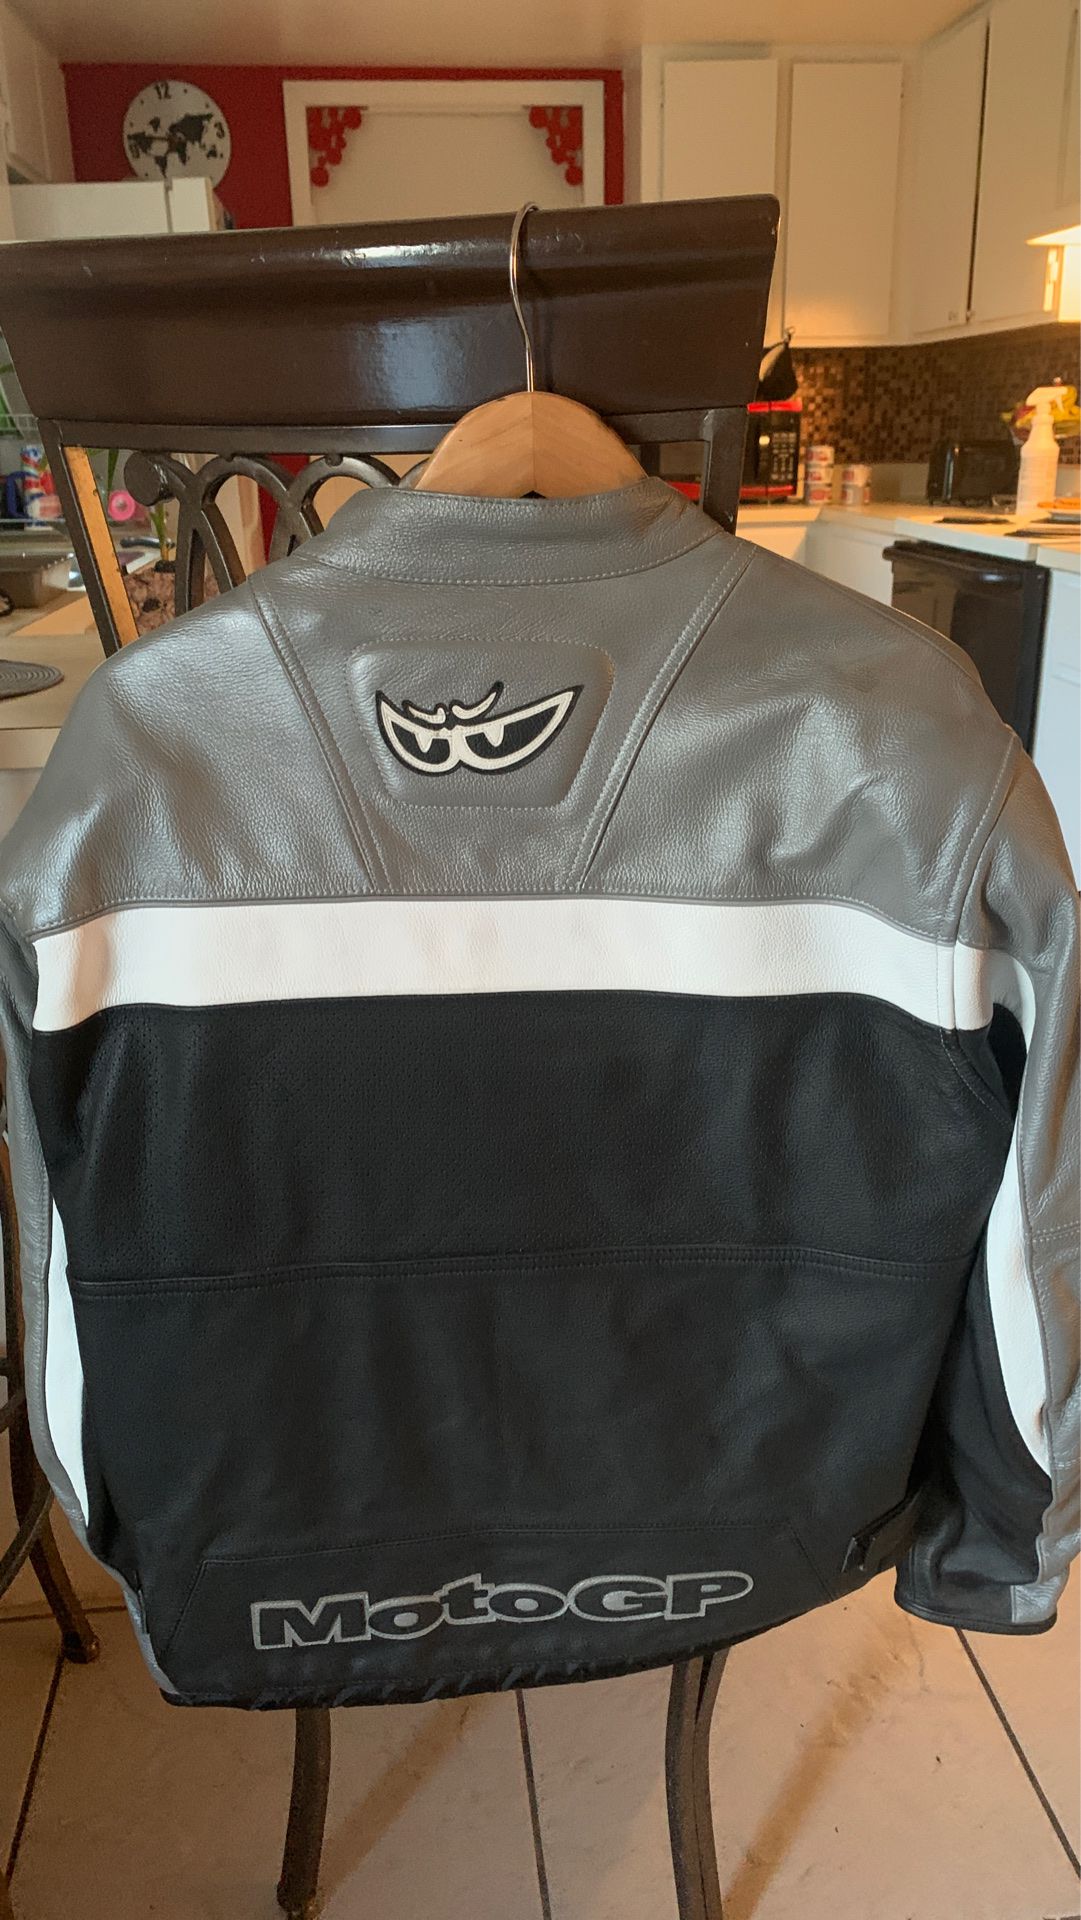 Moto Gp leather motorcycle jacket